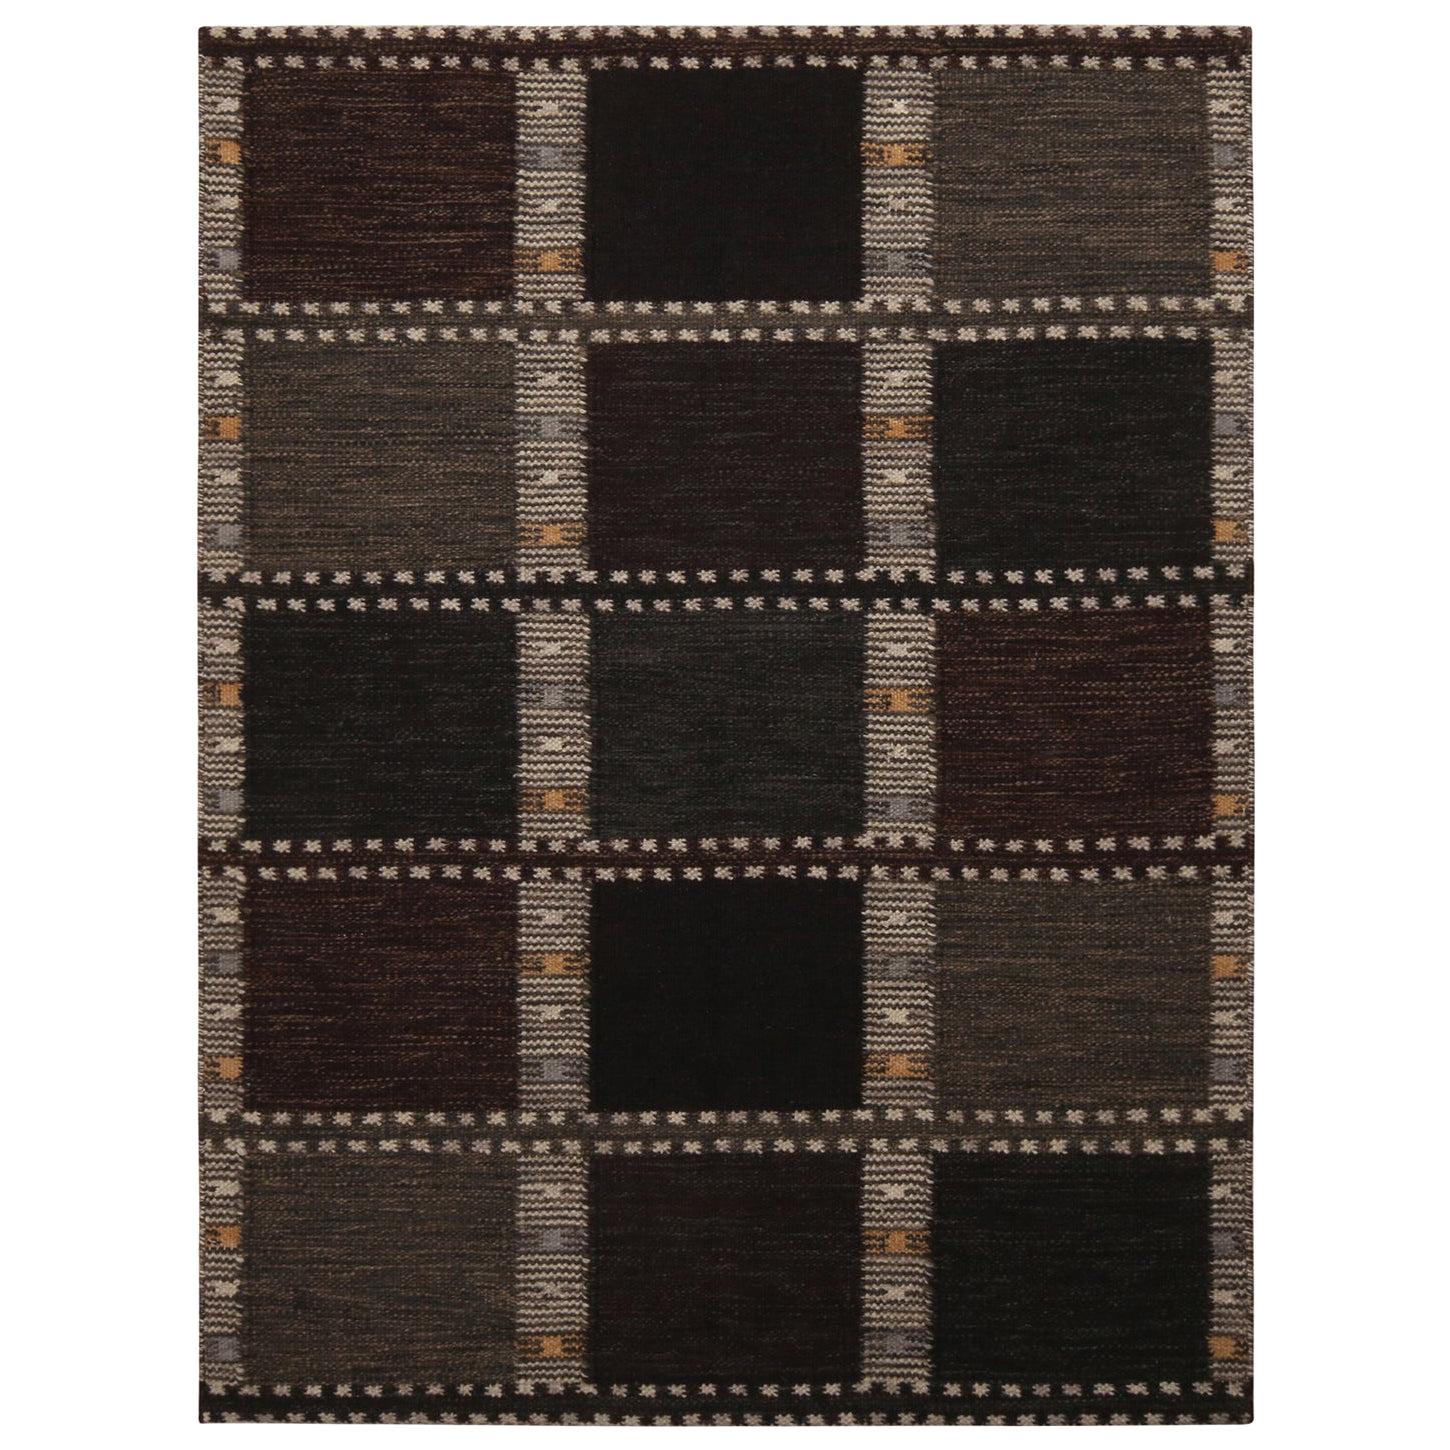 Rug & Kilim’s Scandinavian Inspired Beige-Brown and Green Wool Kilim Rug